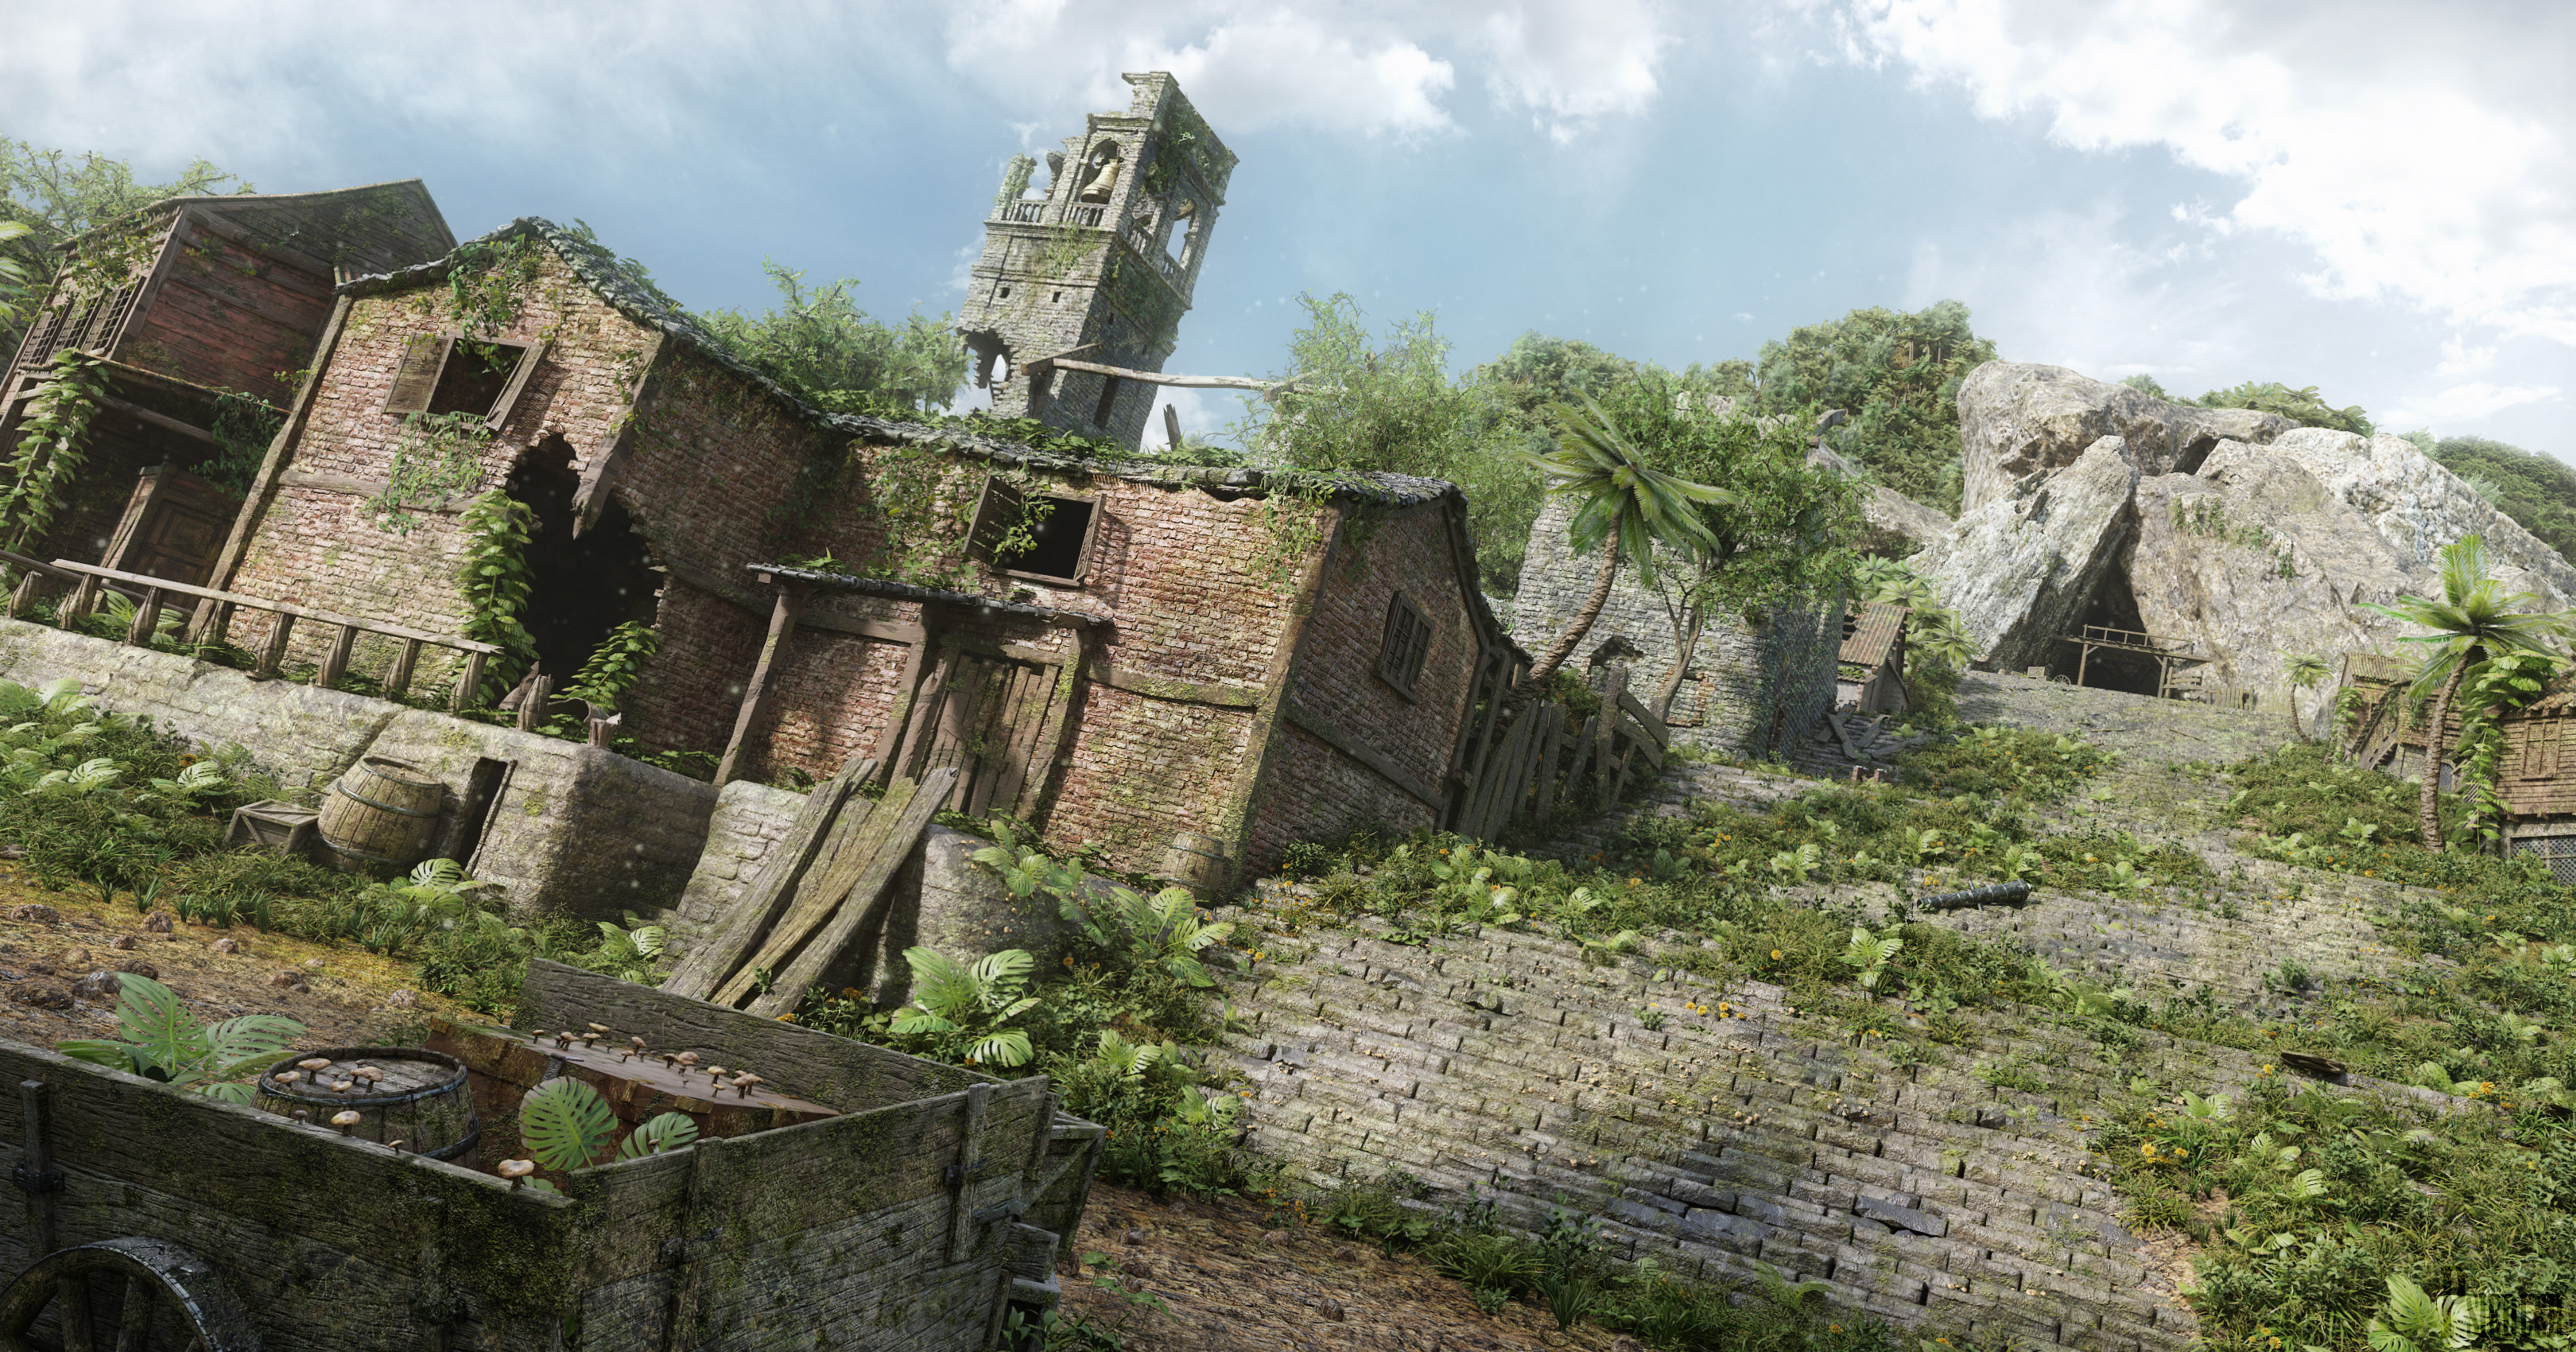 Abandoned village reclamation. Uncharted 4 environment. Uncharted дом. Места из игр. Дом из Uncharted 4.